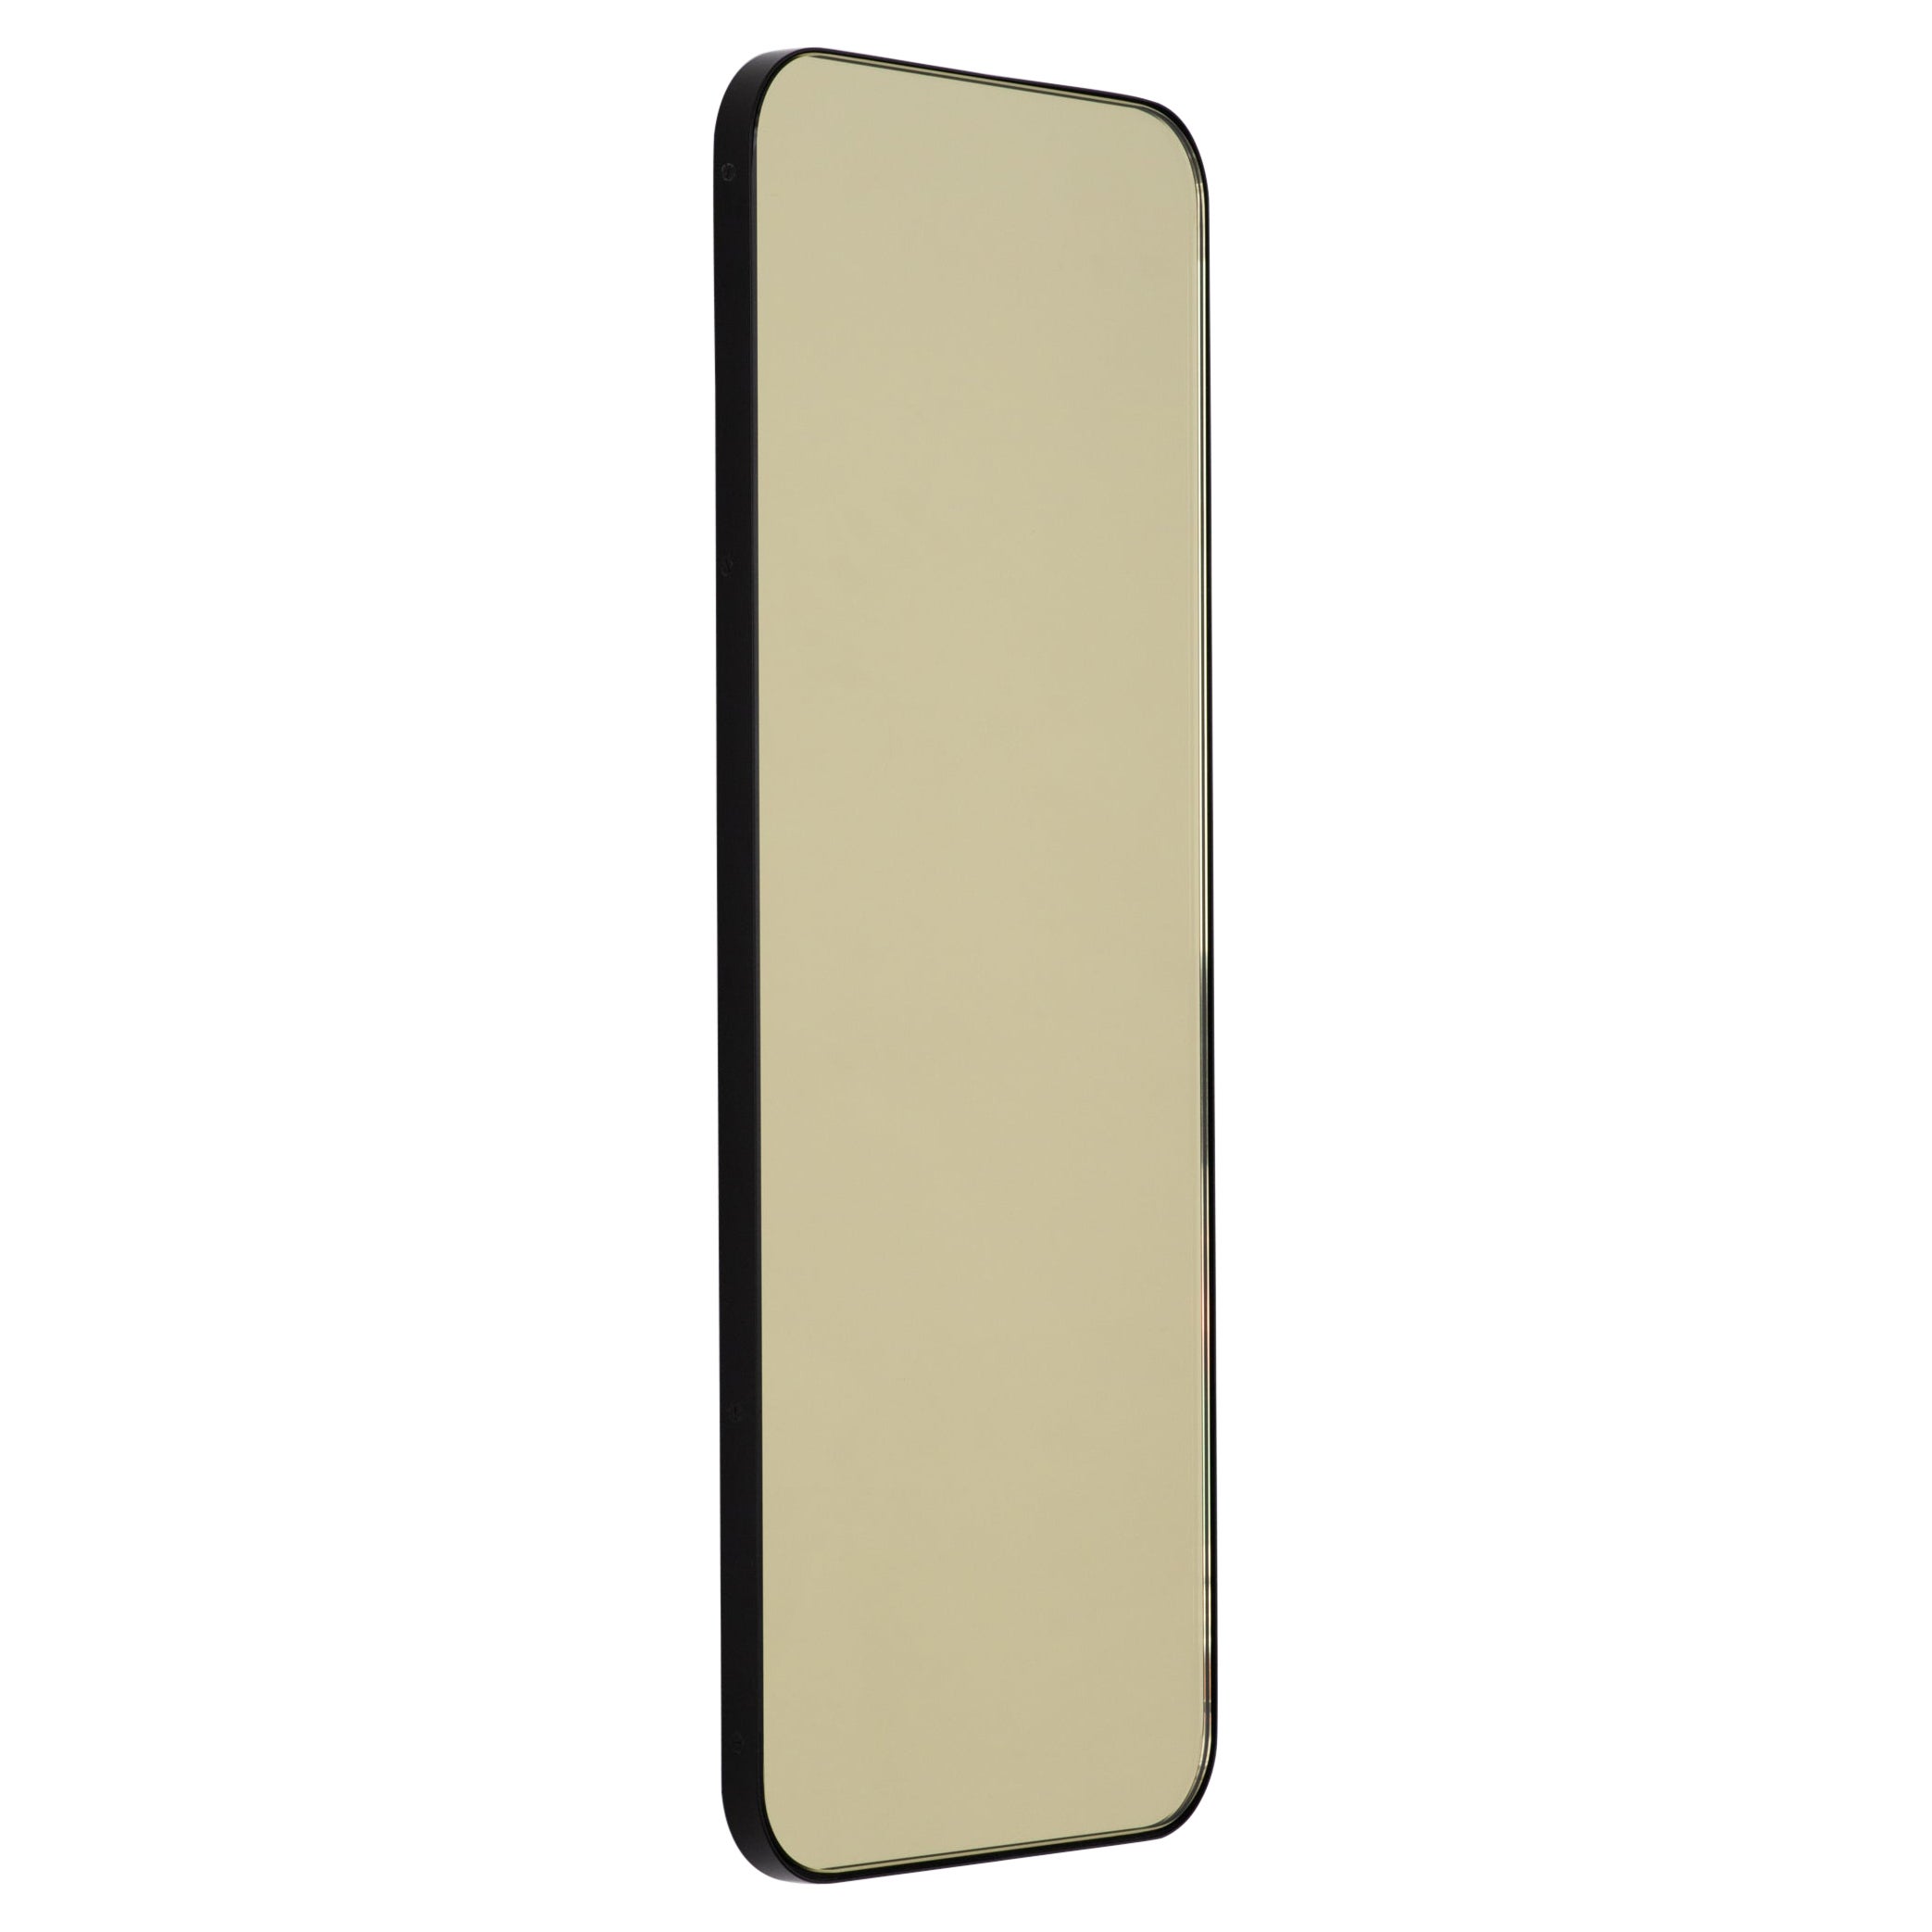 Quadris Gold Tinted Rectangular Contemporary Mirror with a Black Frame, Small